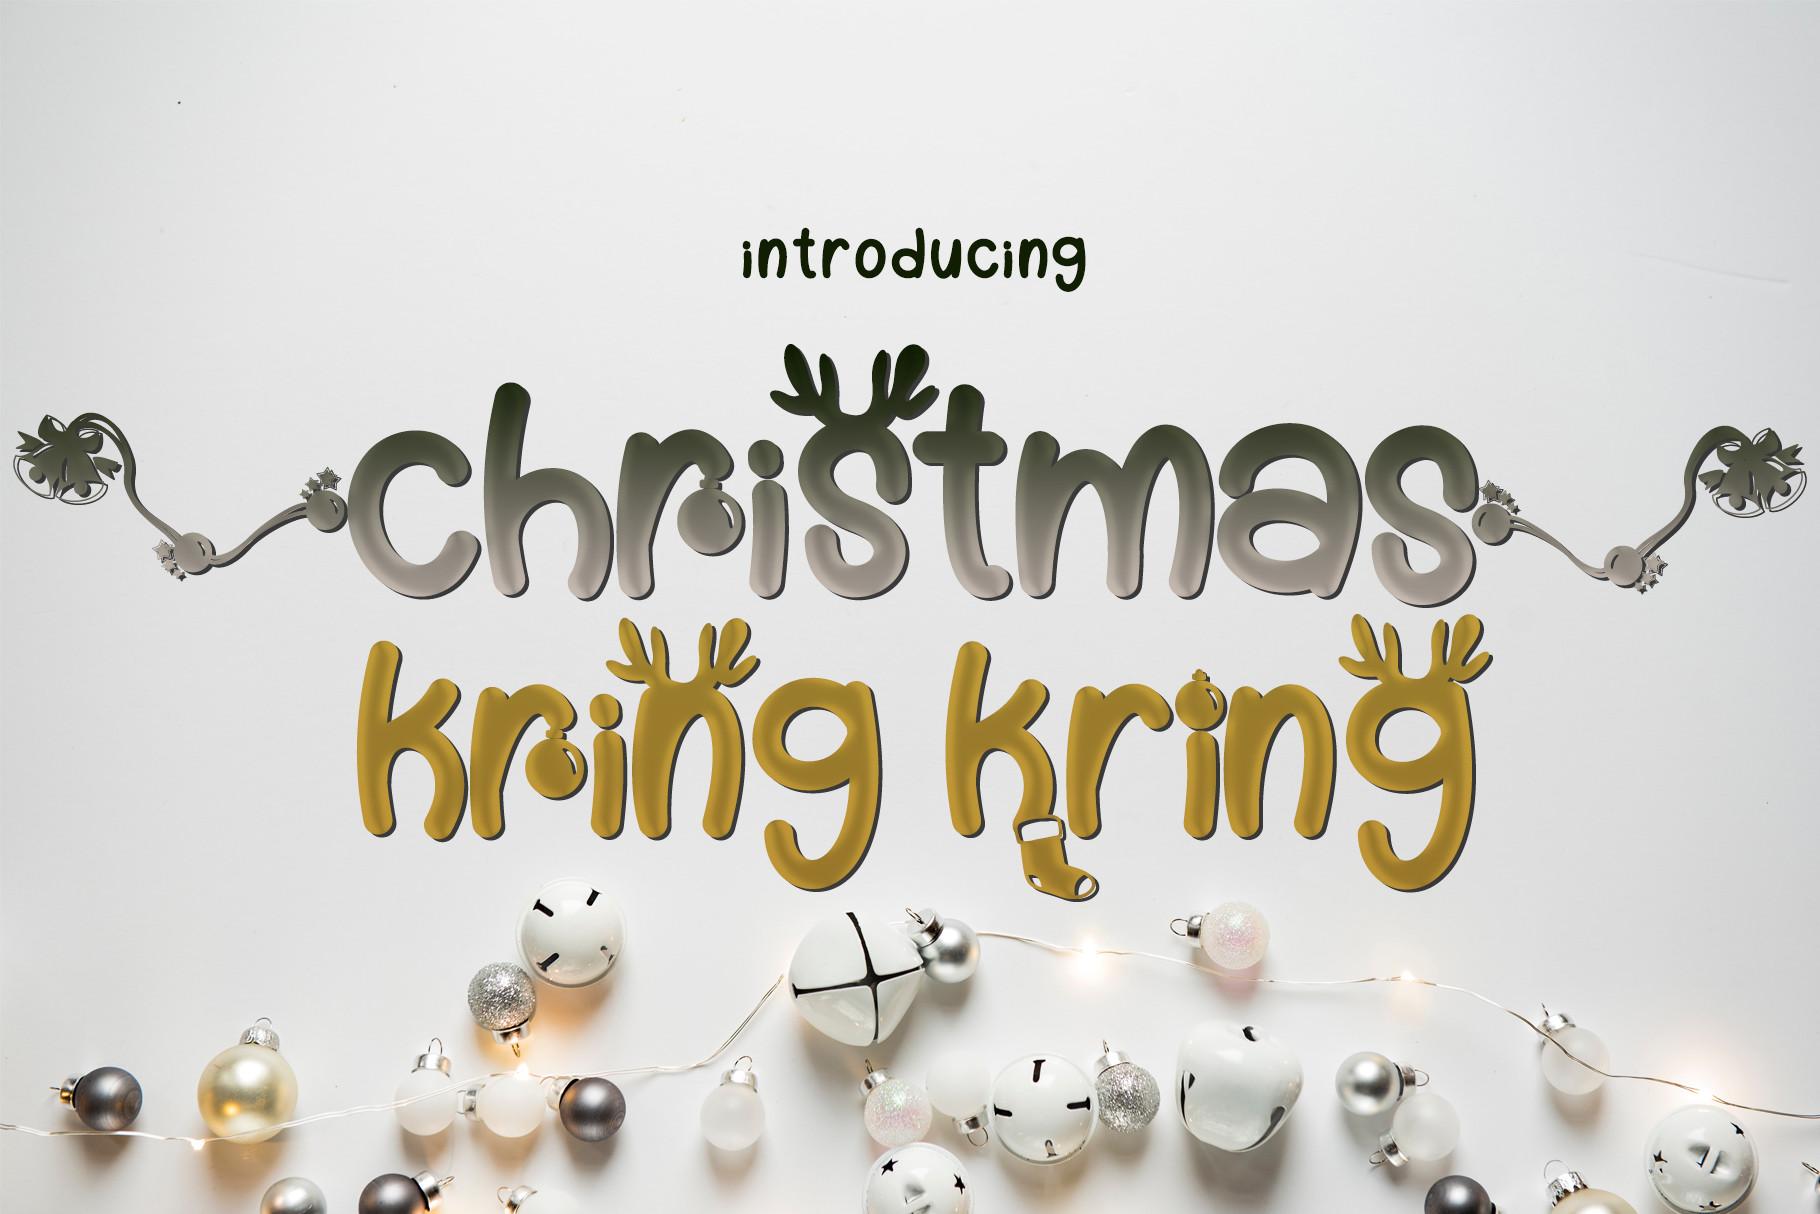 Christmas Kring-kring Font